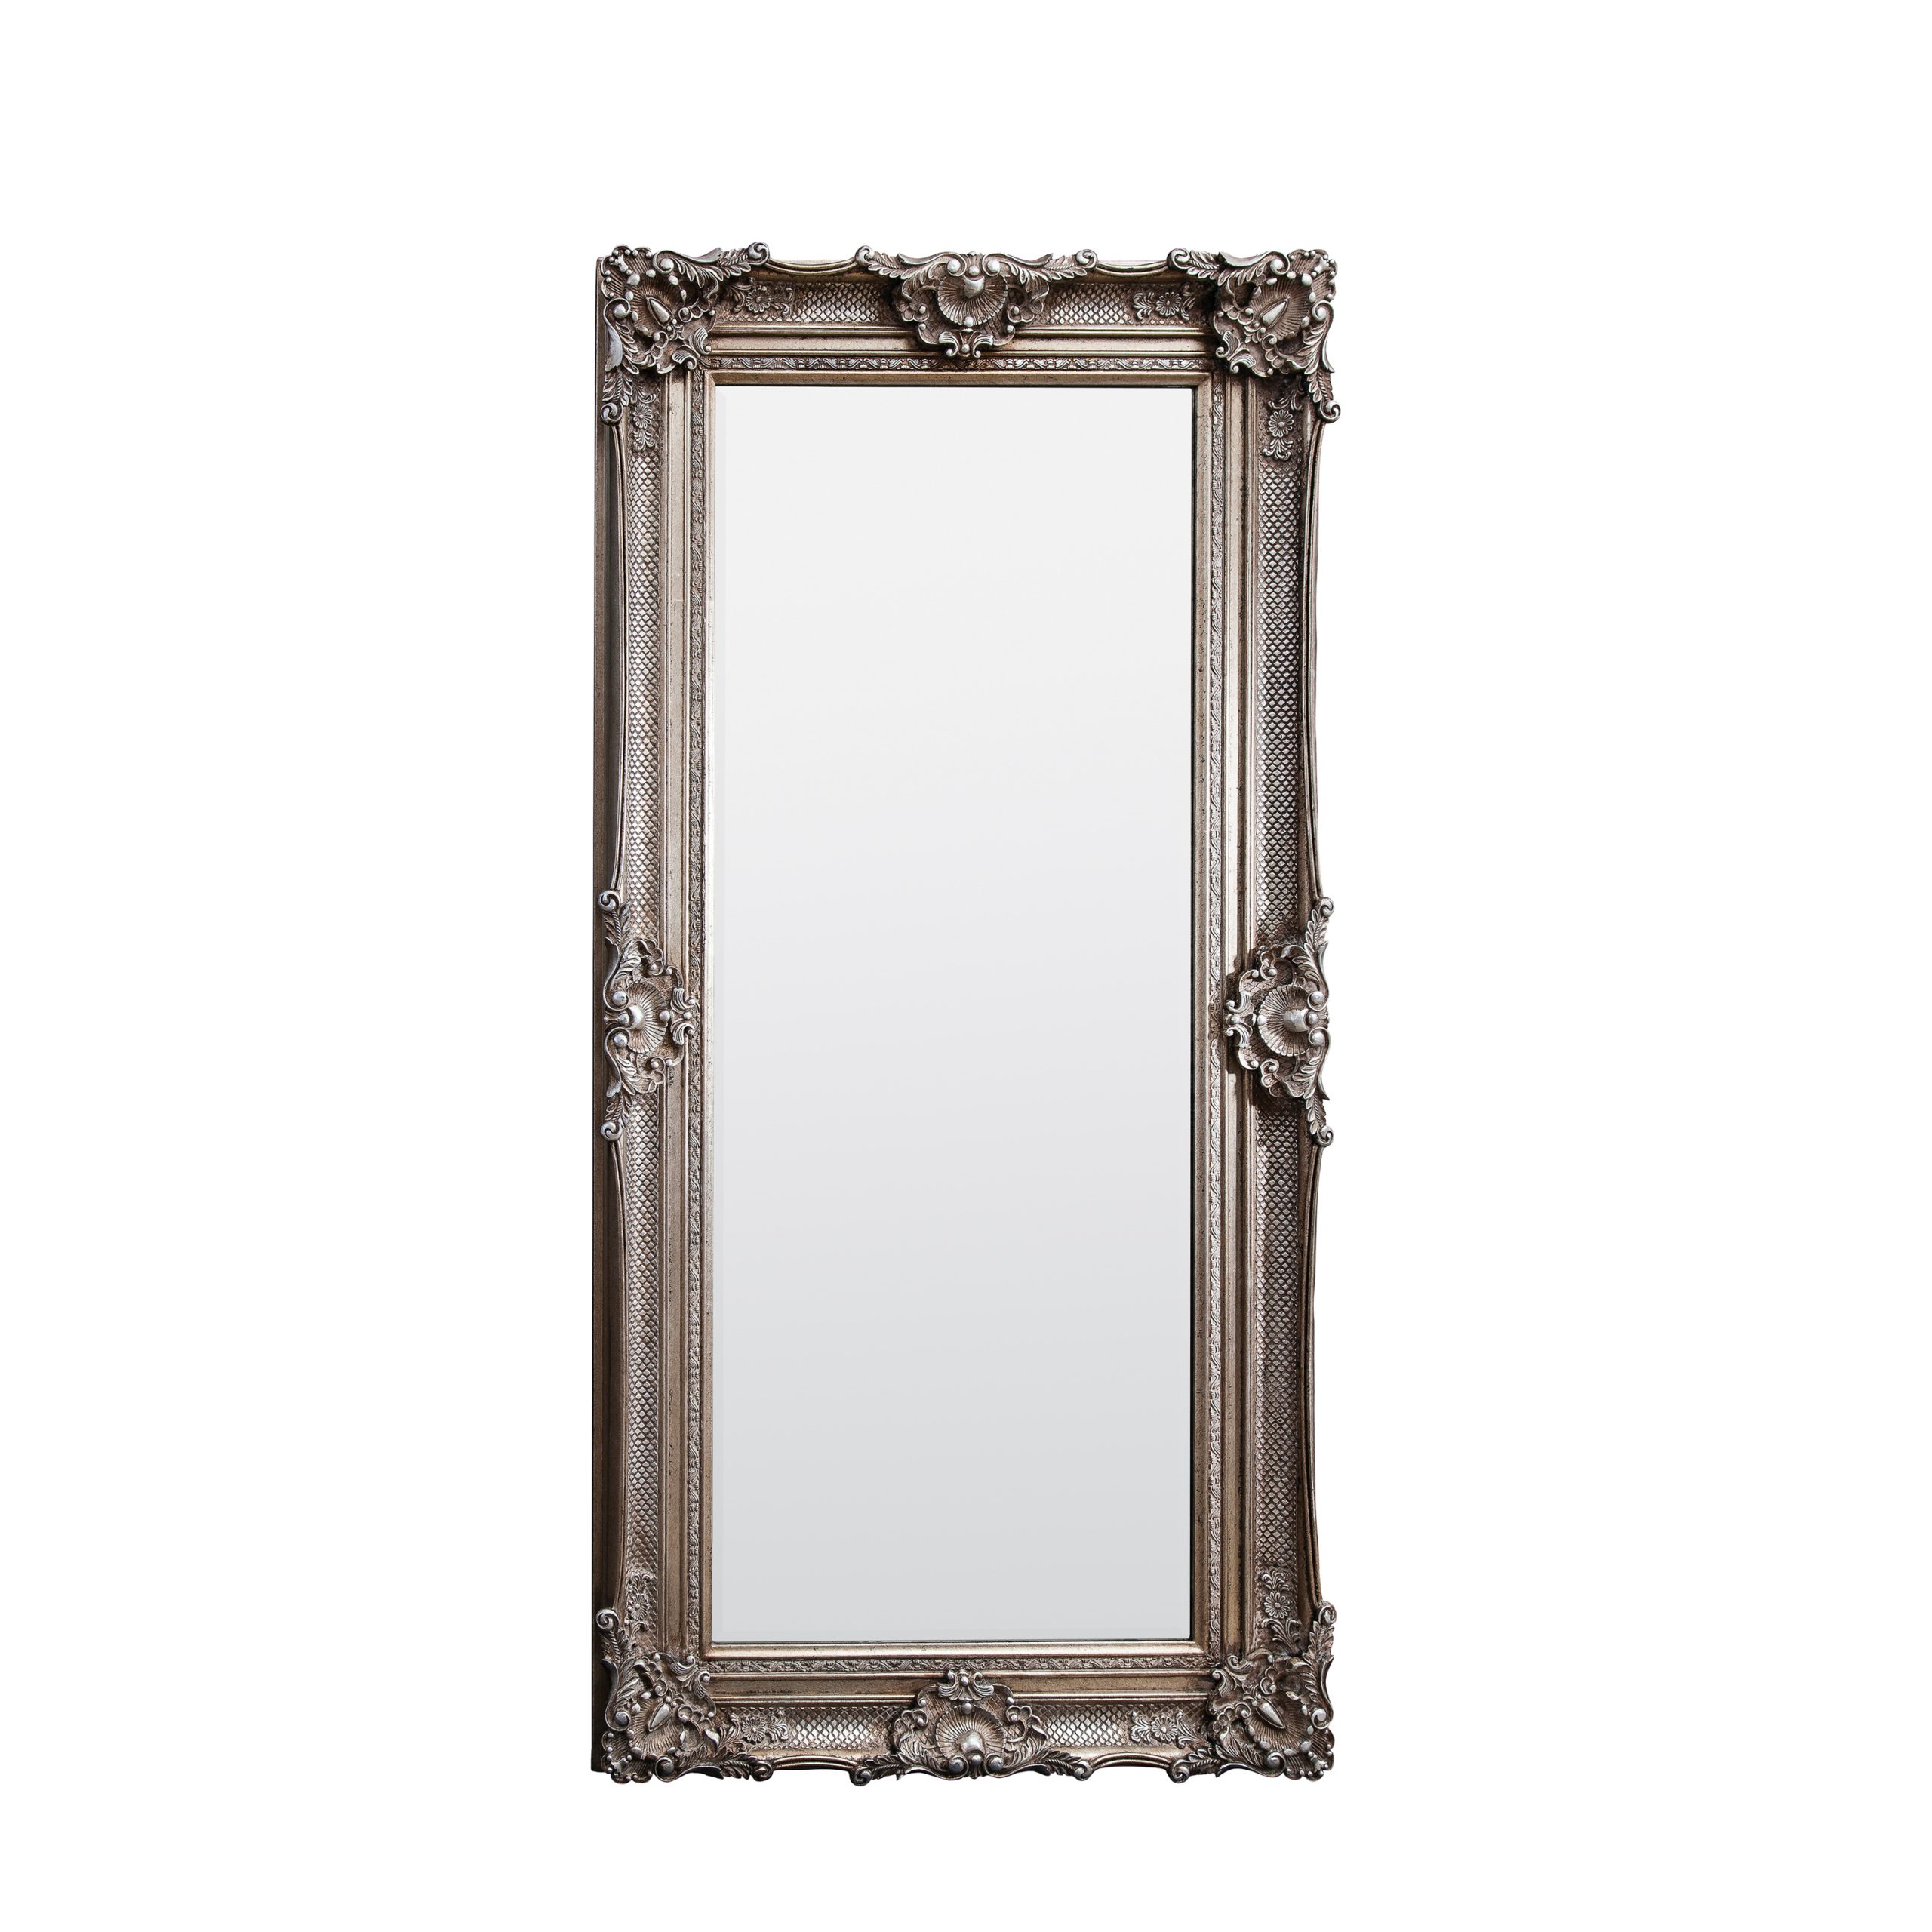 Gallery Direct Stretton Leaner Mirror Silver